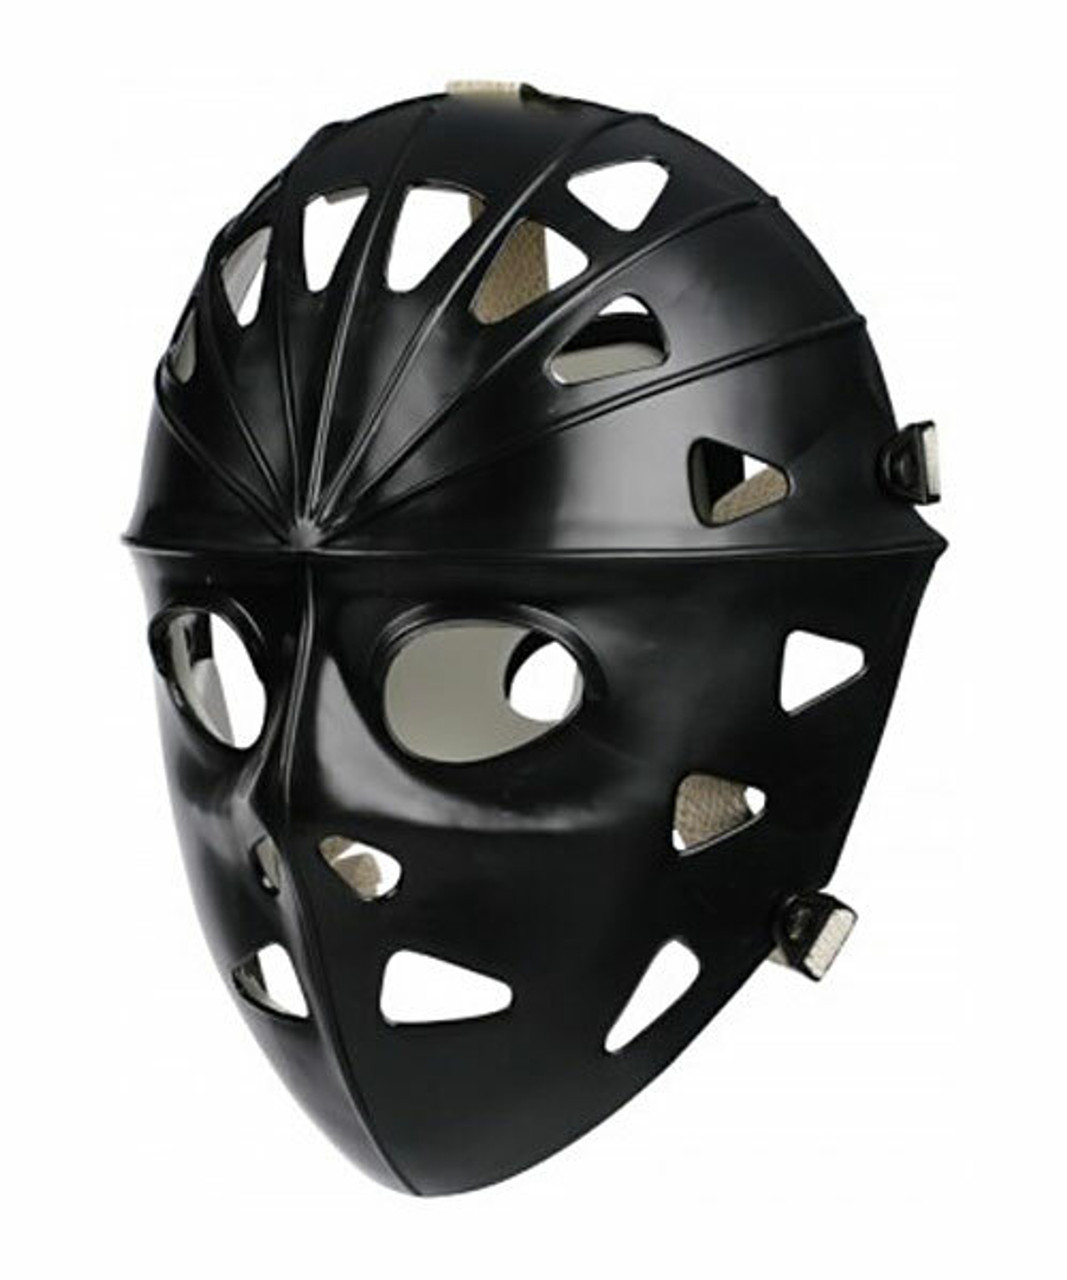 Mylec MK3 Ultra Pro Goalie Mask - Flame